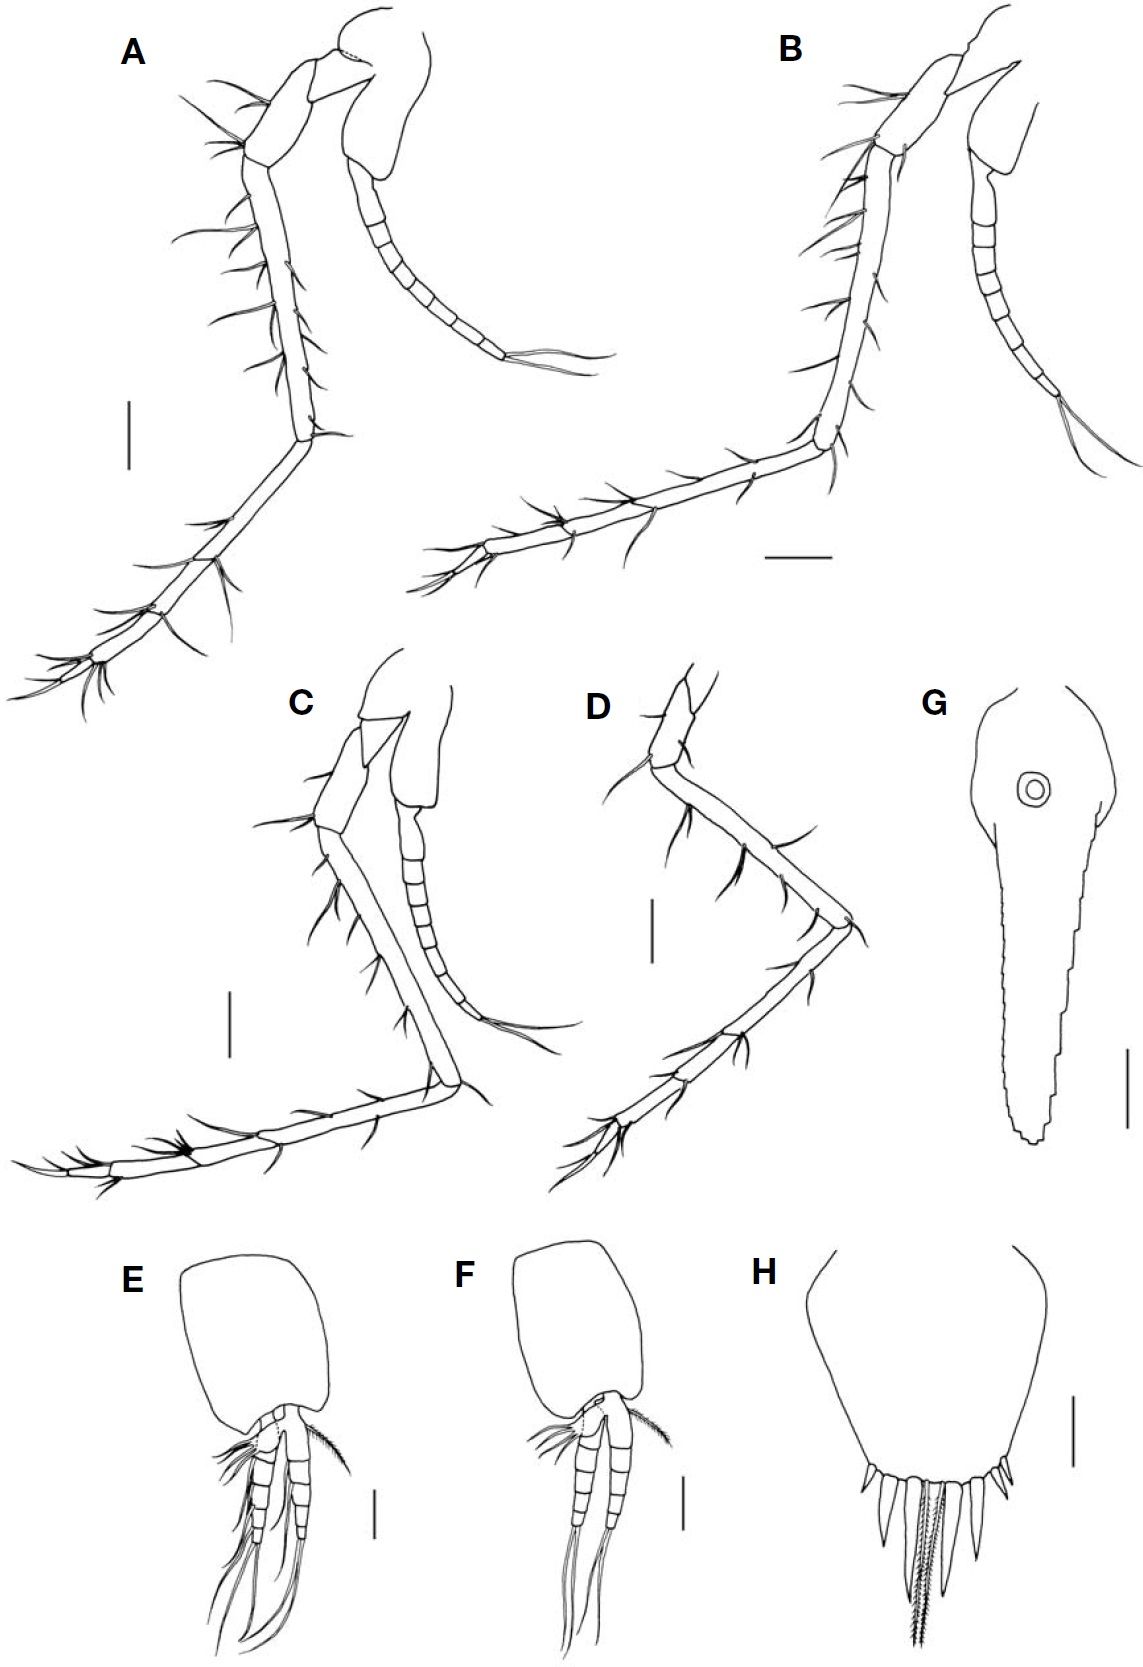 Erythrops nana W. Tattersall 1922 male. A Fourth thoracopod; B Fifth thoracopod; C Seventh thoracopod; D Endopod of eighth thoracopod; E Third pleopod; F Fourth pleopod; G Inner uropod; H Telson. Scale bars: A-H=0.1 mm.